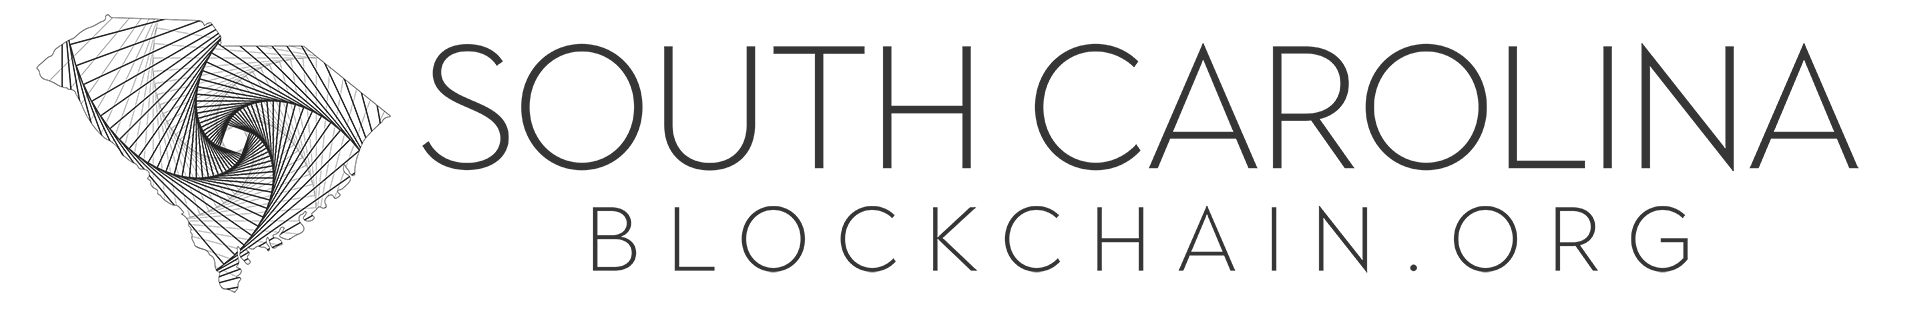 SouthCarolinaBlockChain.org